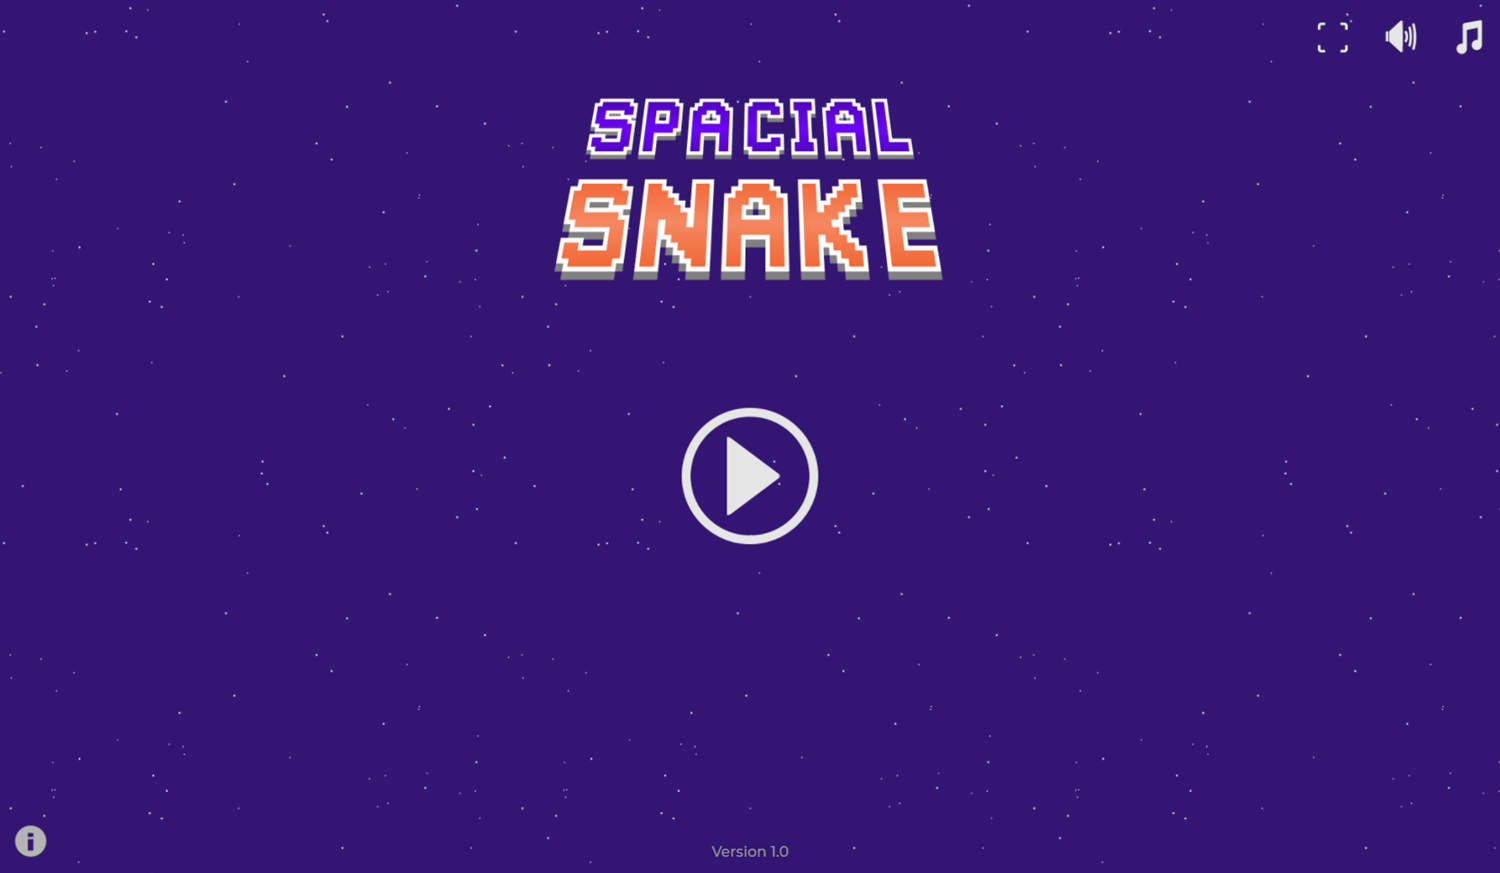 Spacial Snake Game Welcome Screen Screenshot.